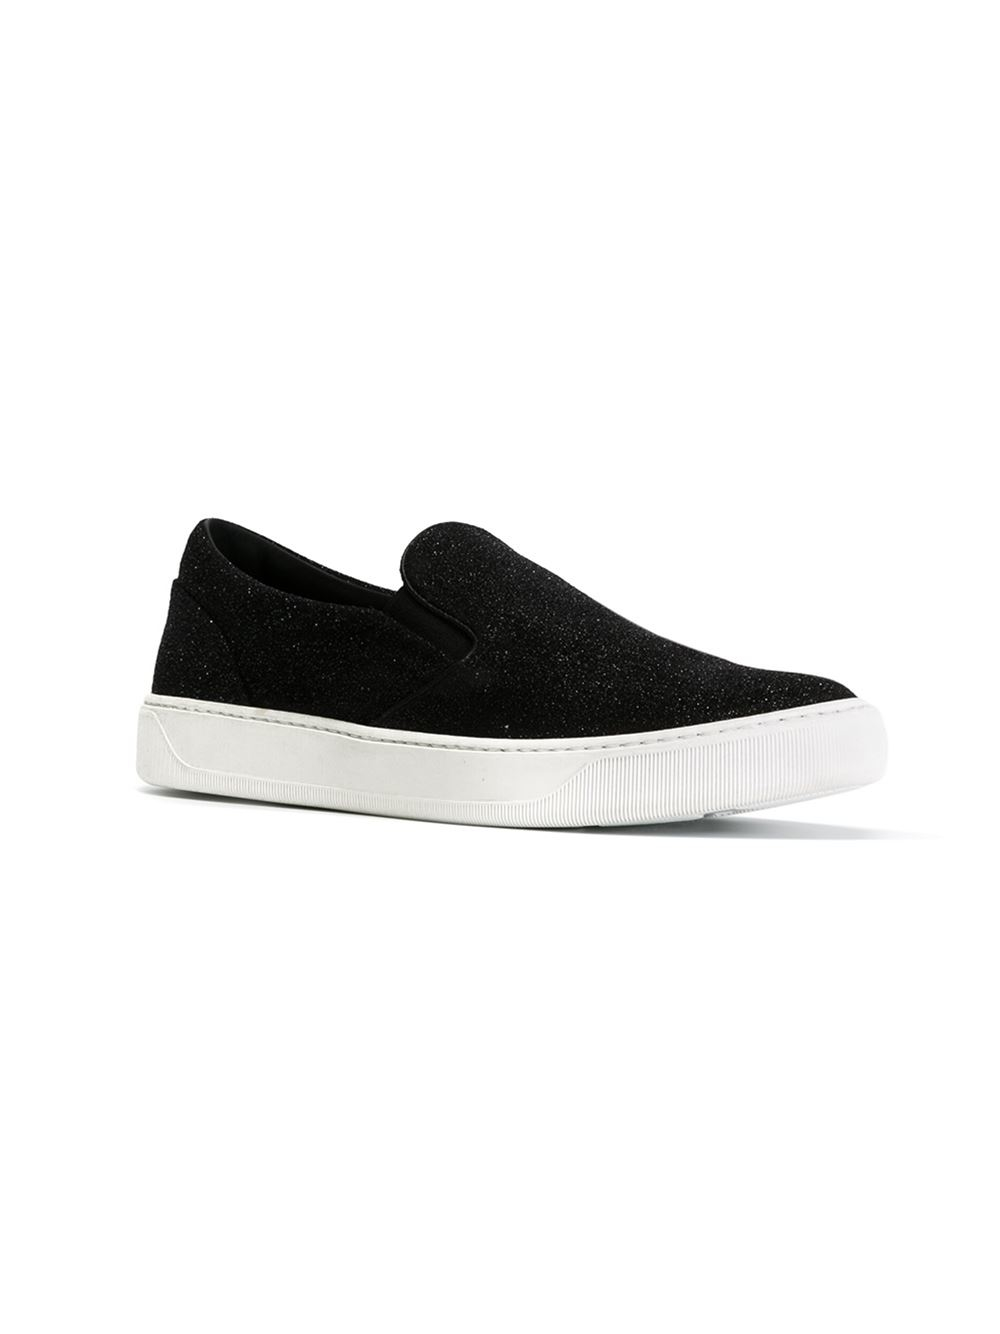 Moncler Slip-on Sneakers in Black - Lyst